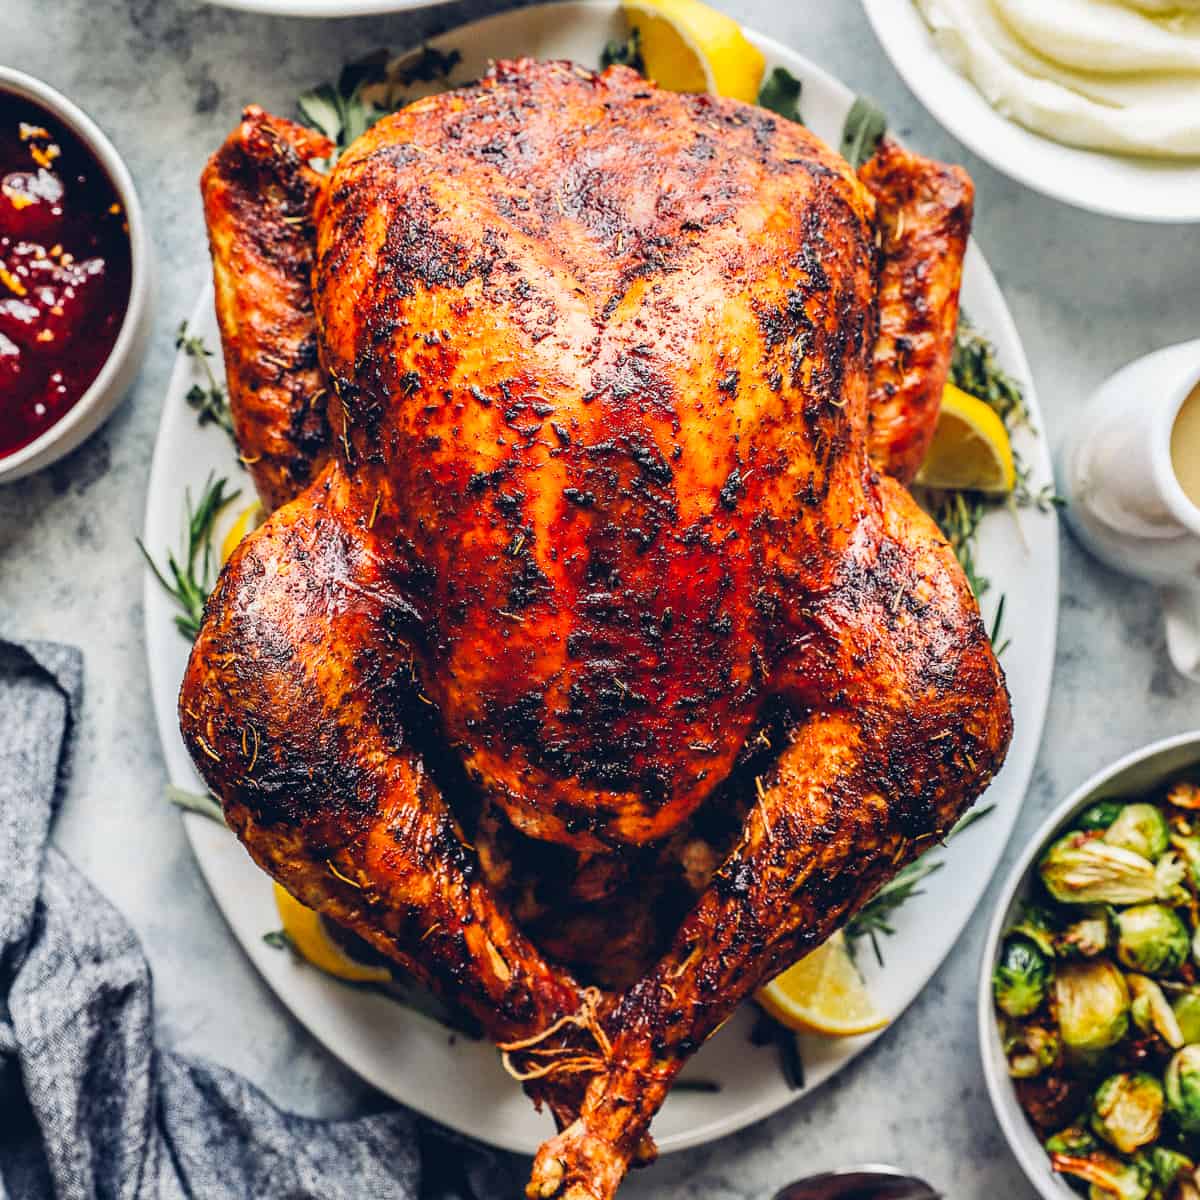 https://www.thecookierookie.com/wp-content/uploads/2022/11/featured-thanksgiving-turkey-recipe.jpg